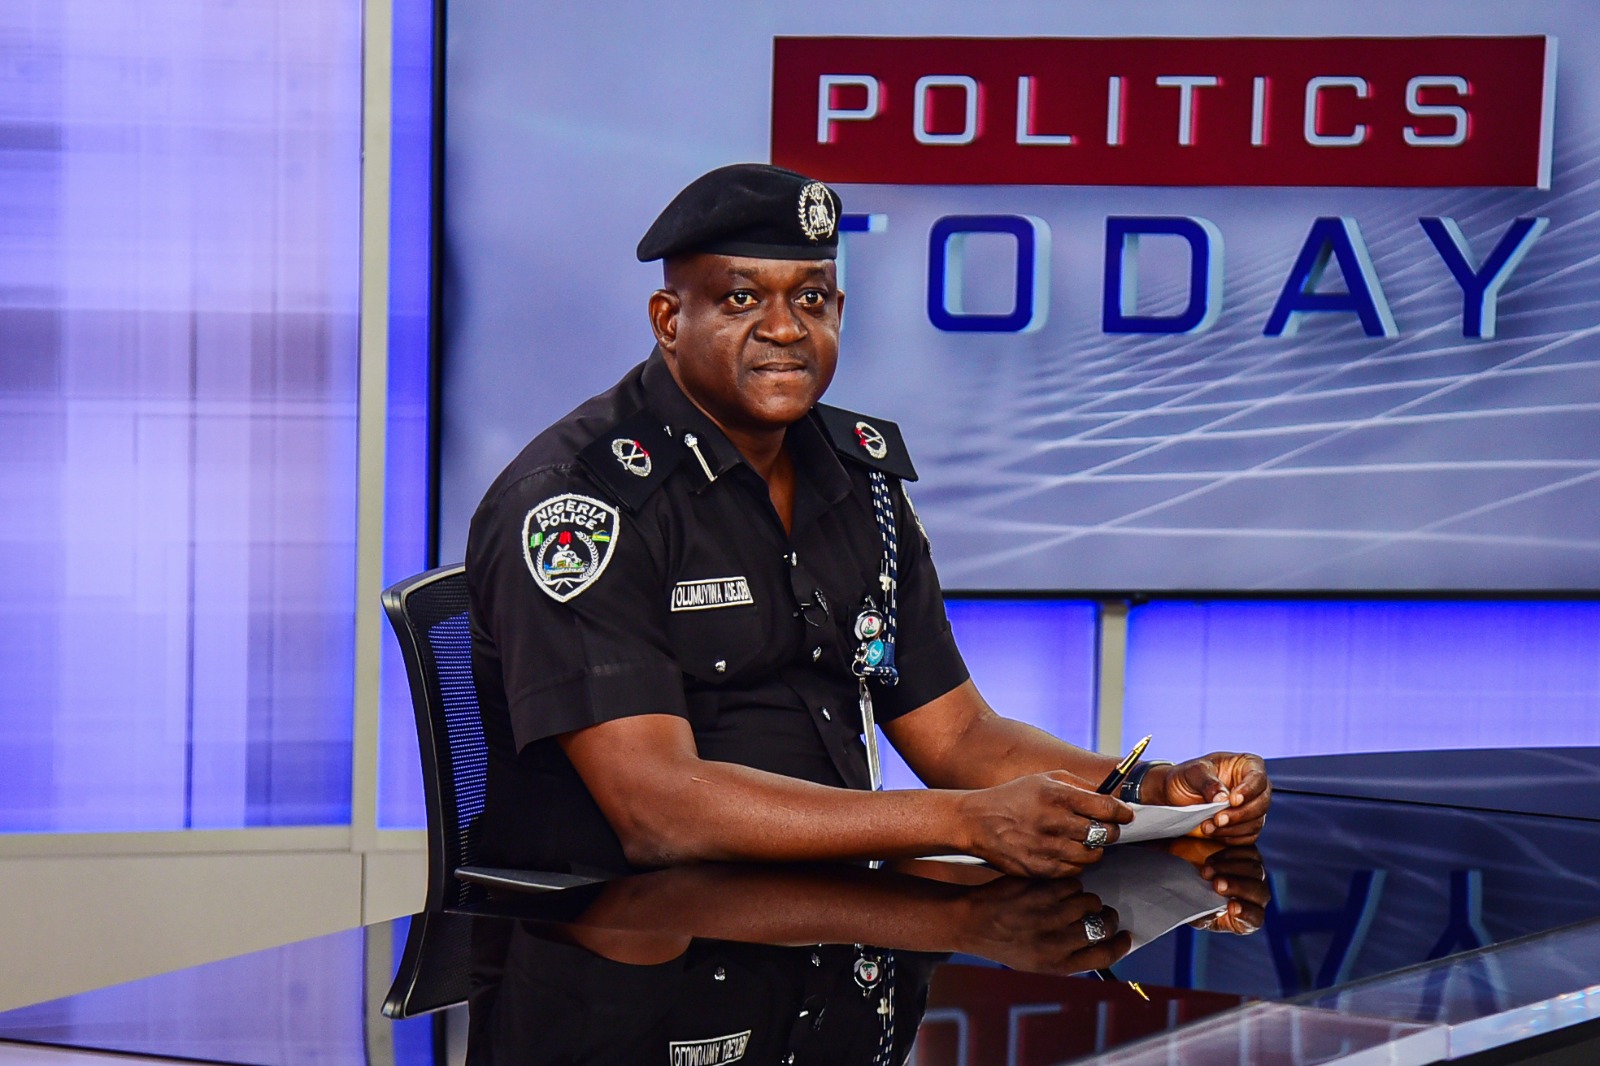 VIDEO: On National TV, Adejobi Once Said FIJ Honours Police Invitations